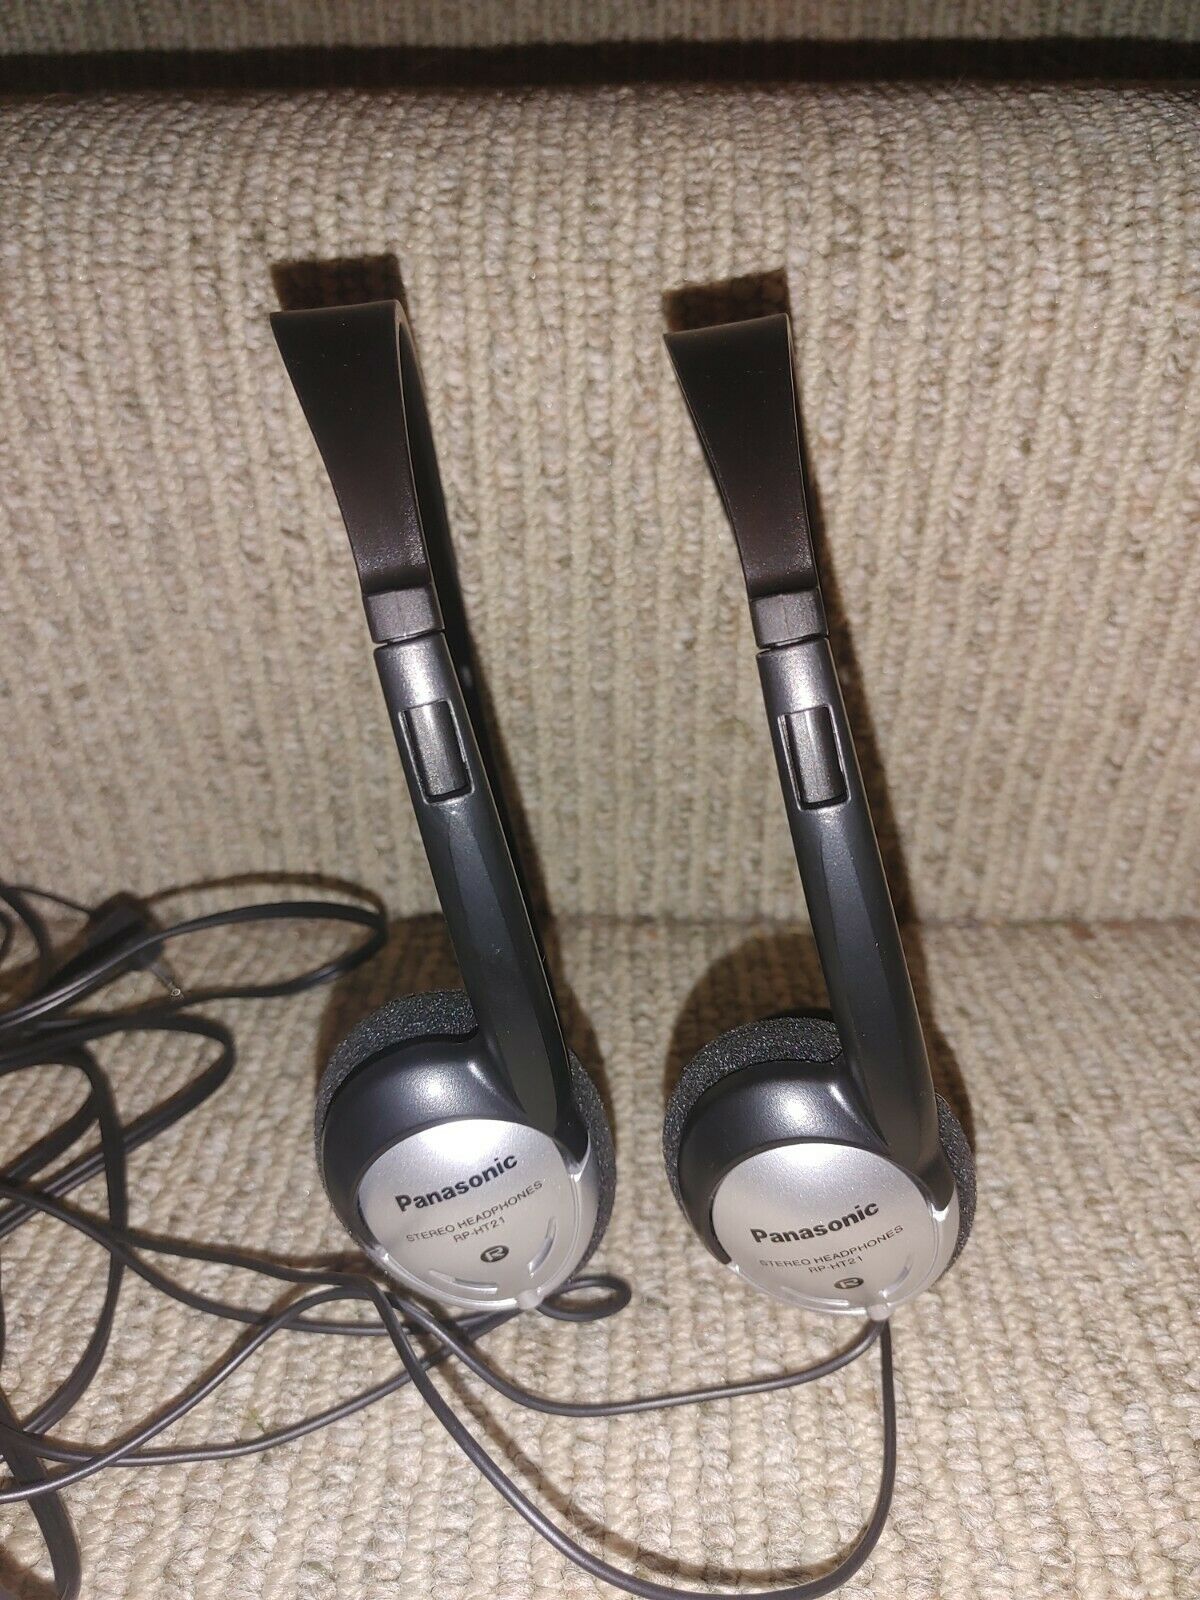 Panasonic Headphones Earphones Pair Rp-ht21 Tested And Working